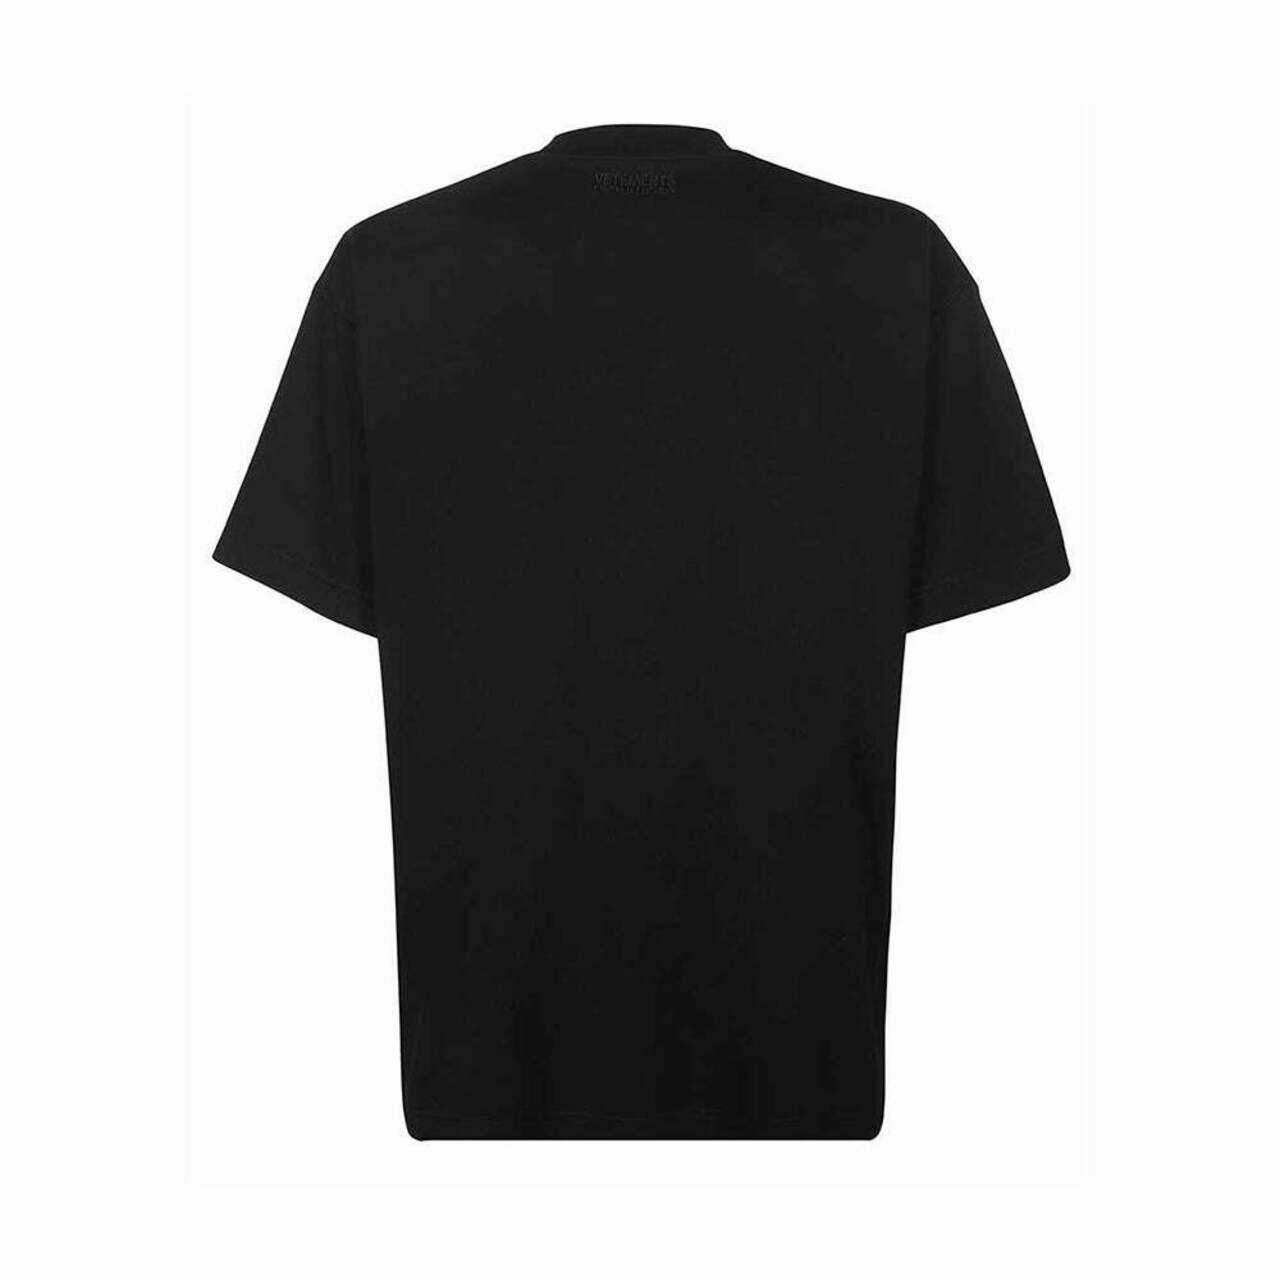 Vetements 'Click Here' Logo Print Oversized T-Shirt Black